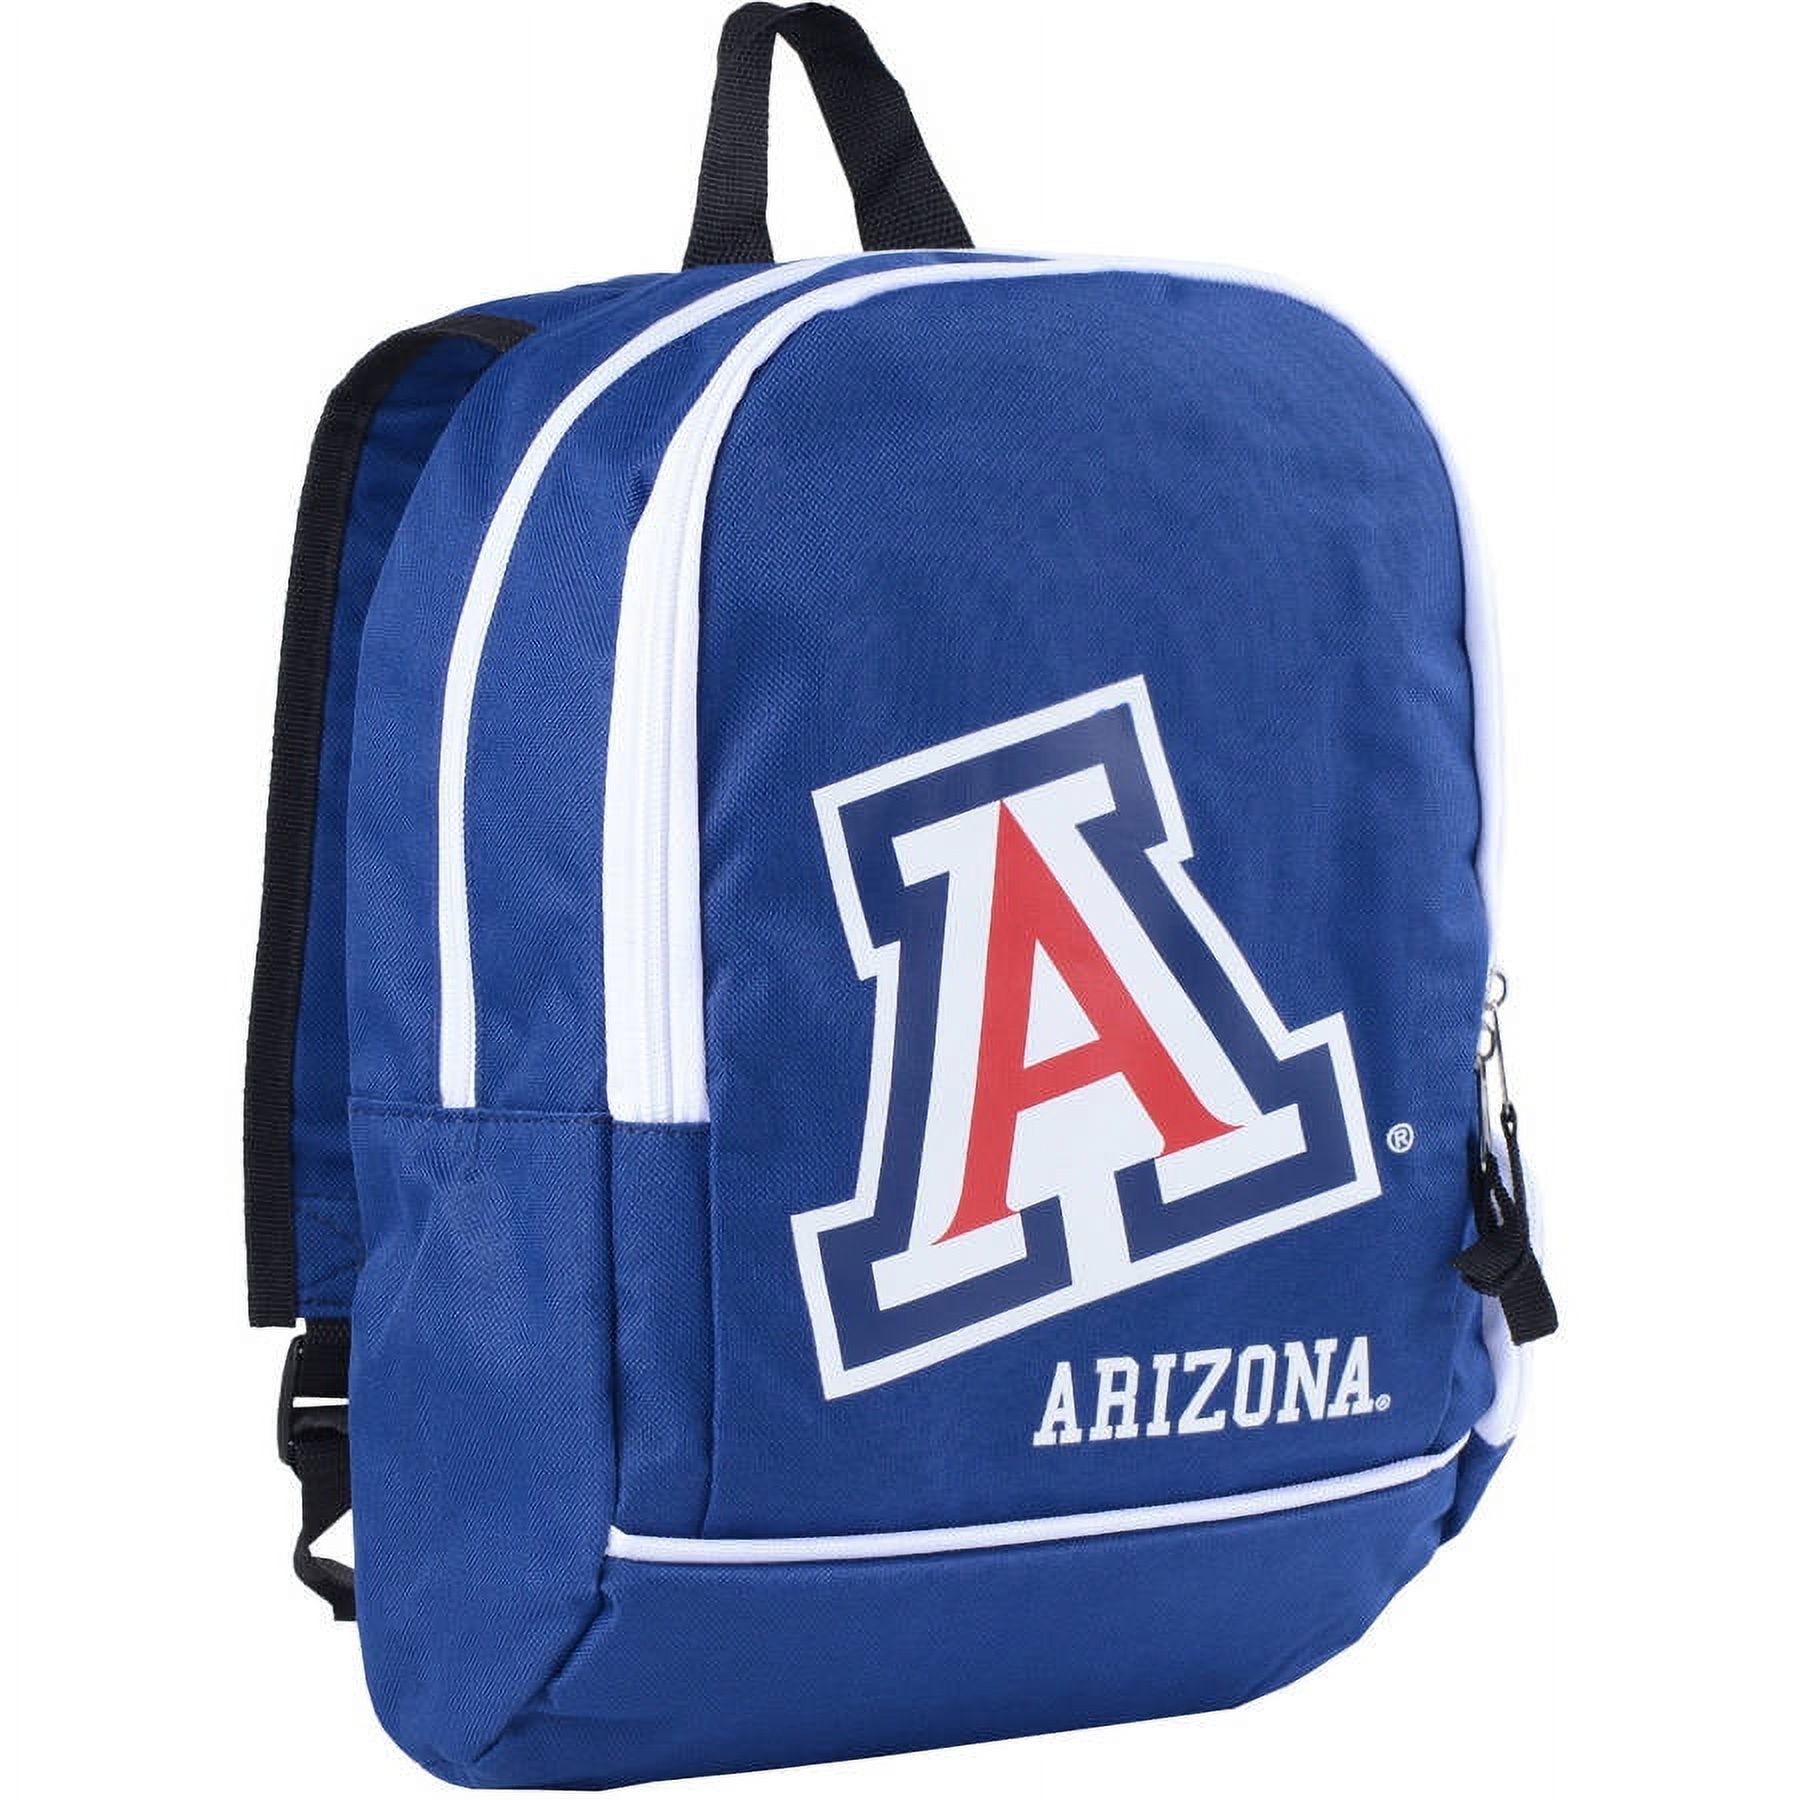 NCAA Arizona Wildcats "Torres" Mini-Backpack - image 1 of 2